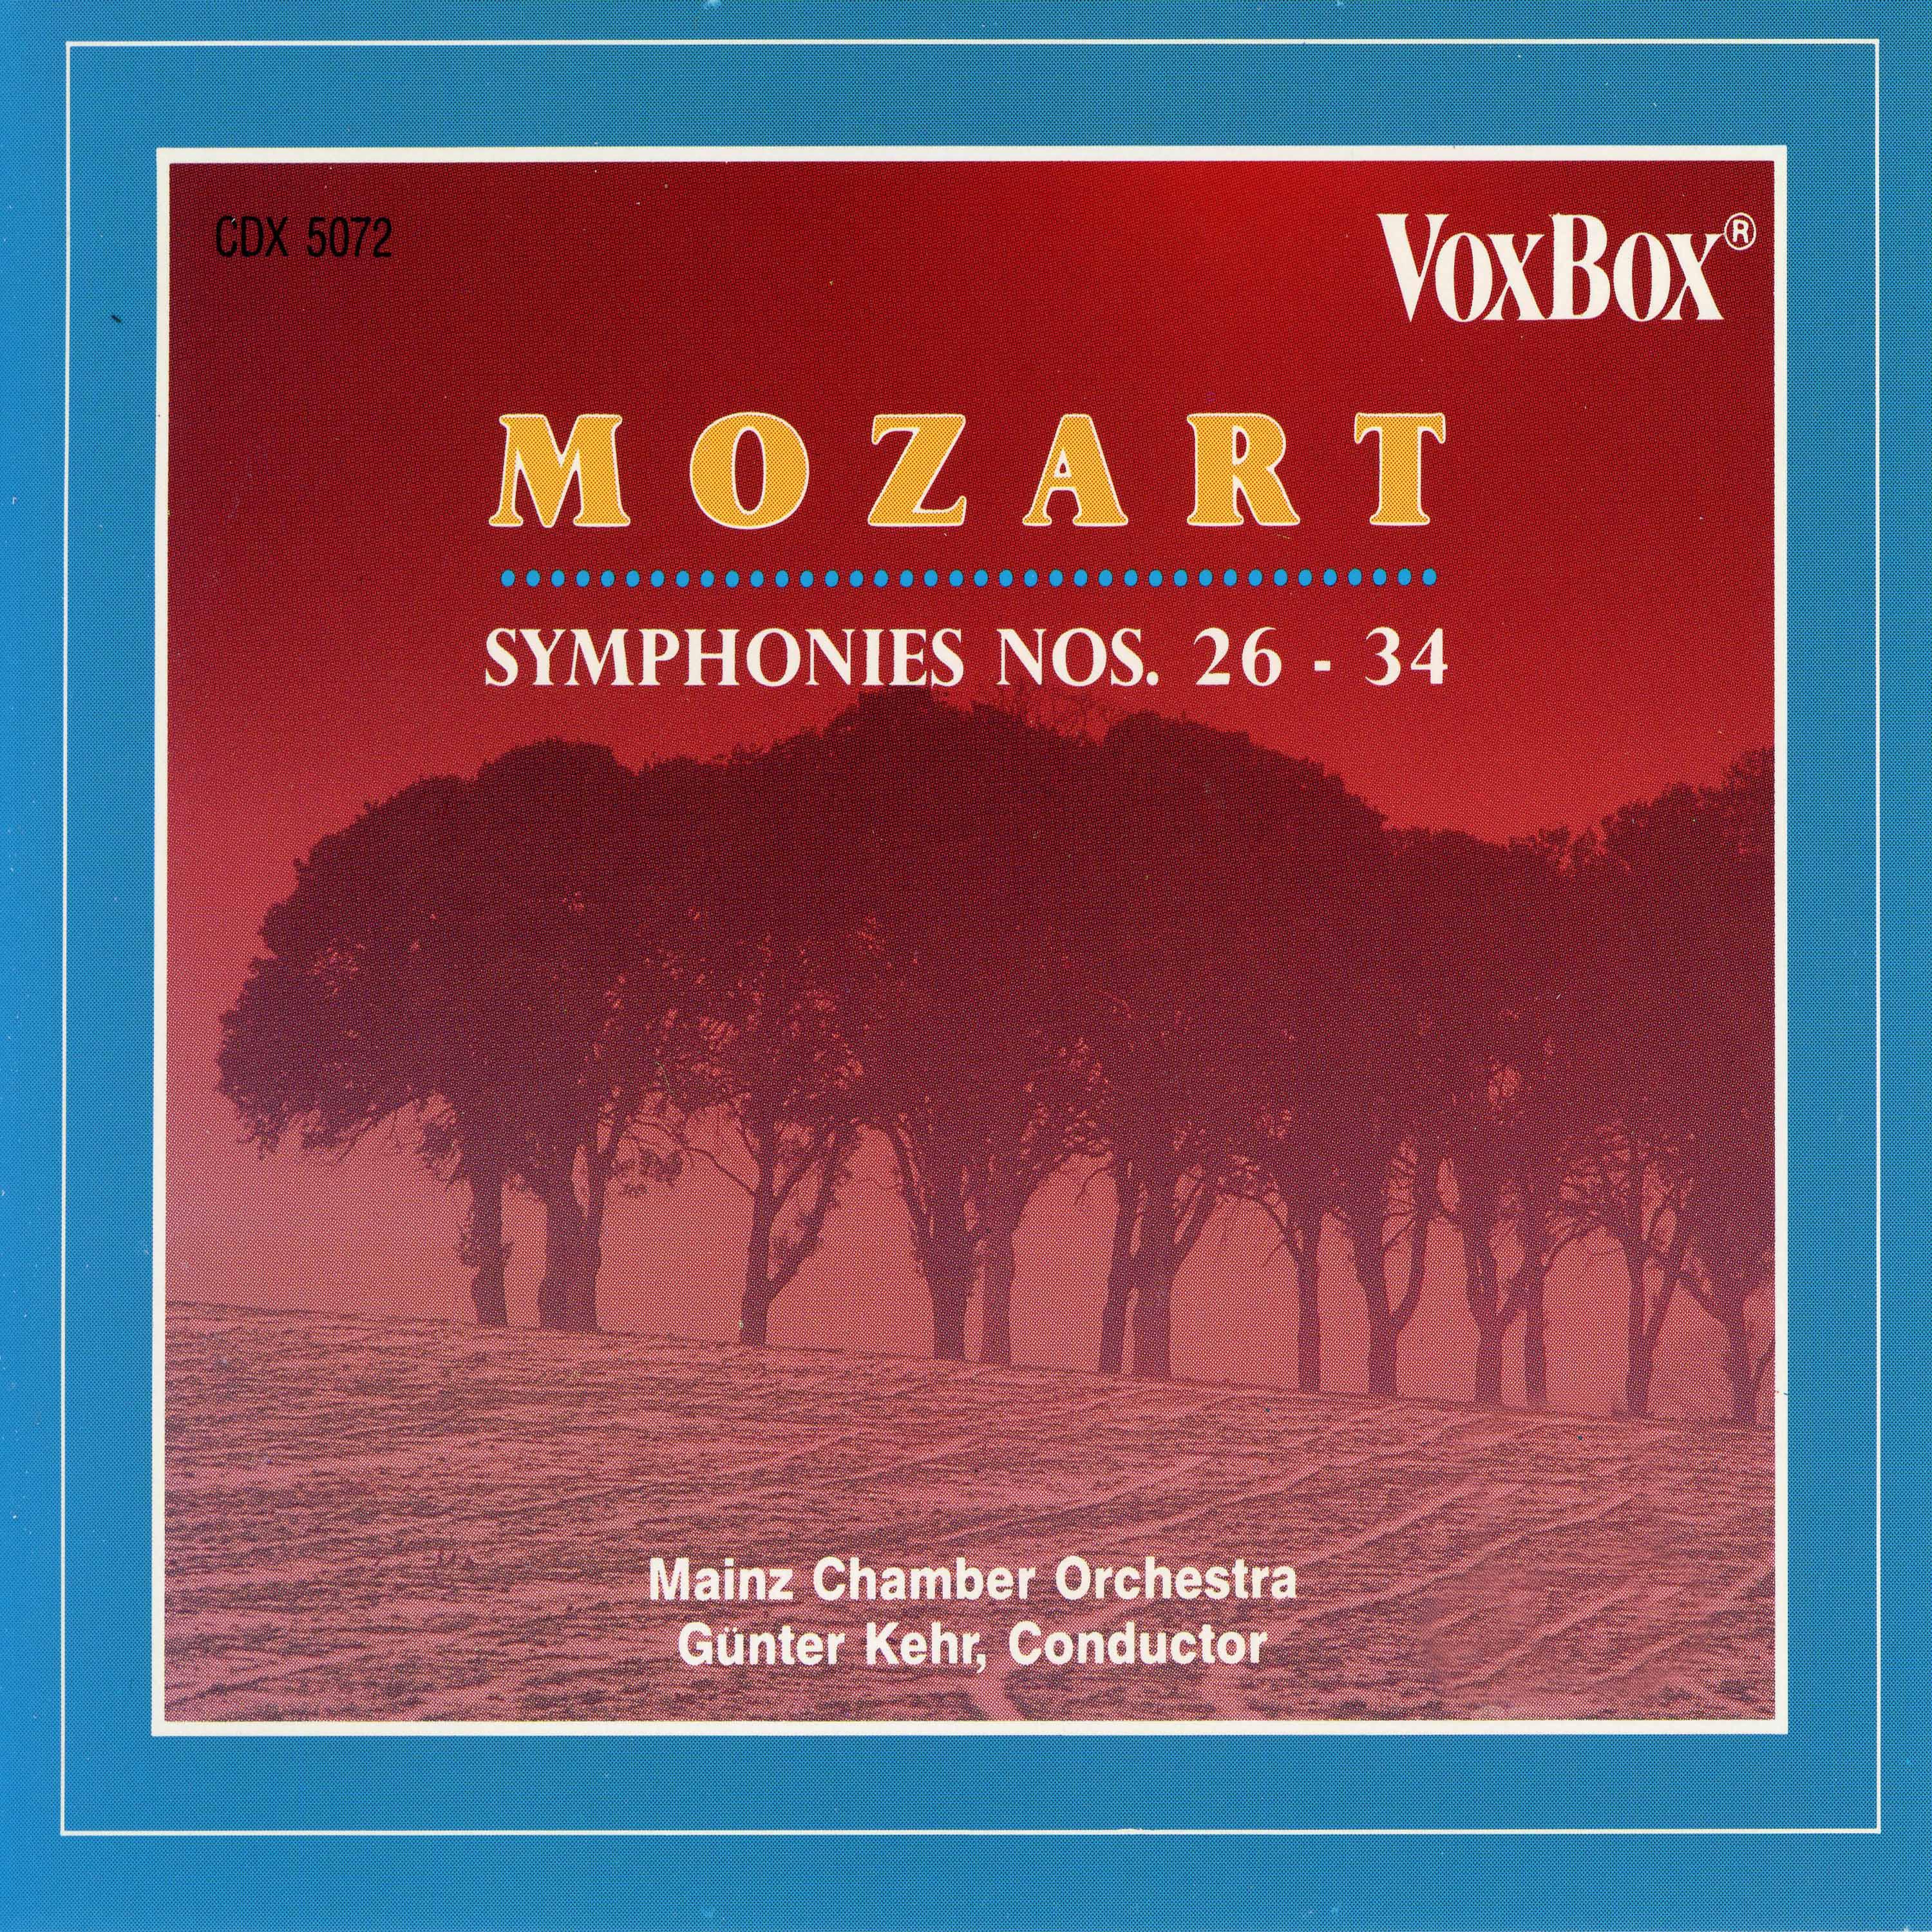 Mozart Symphonies Nos. 26-34